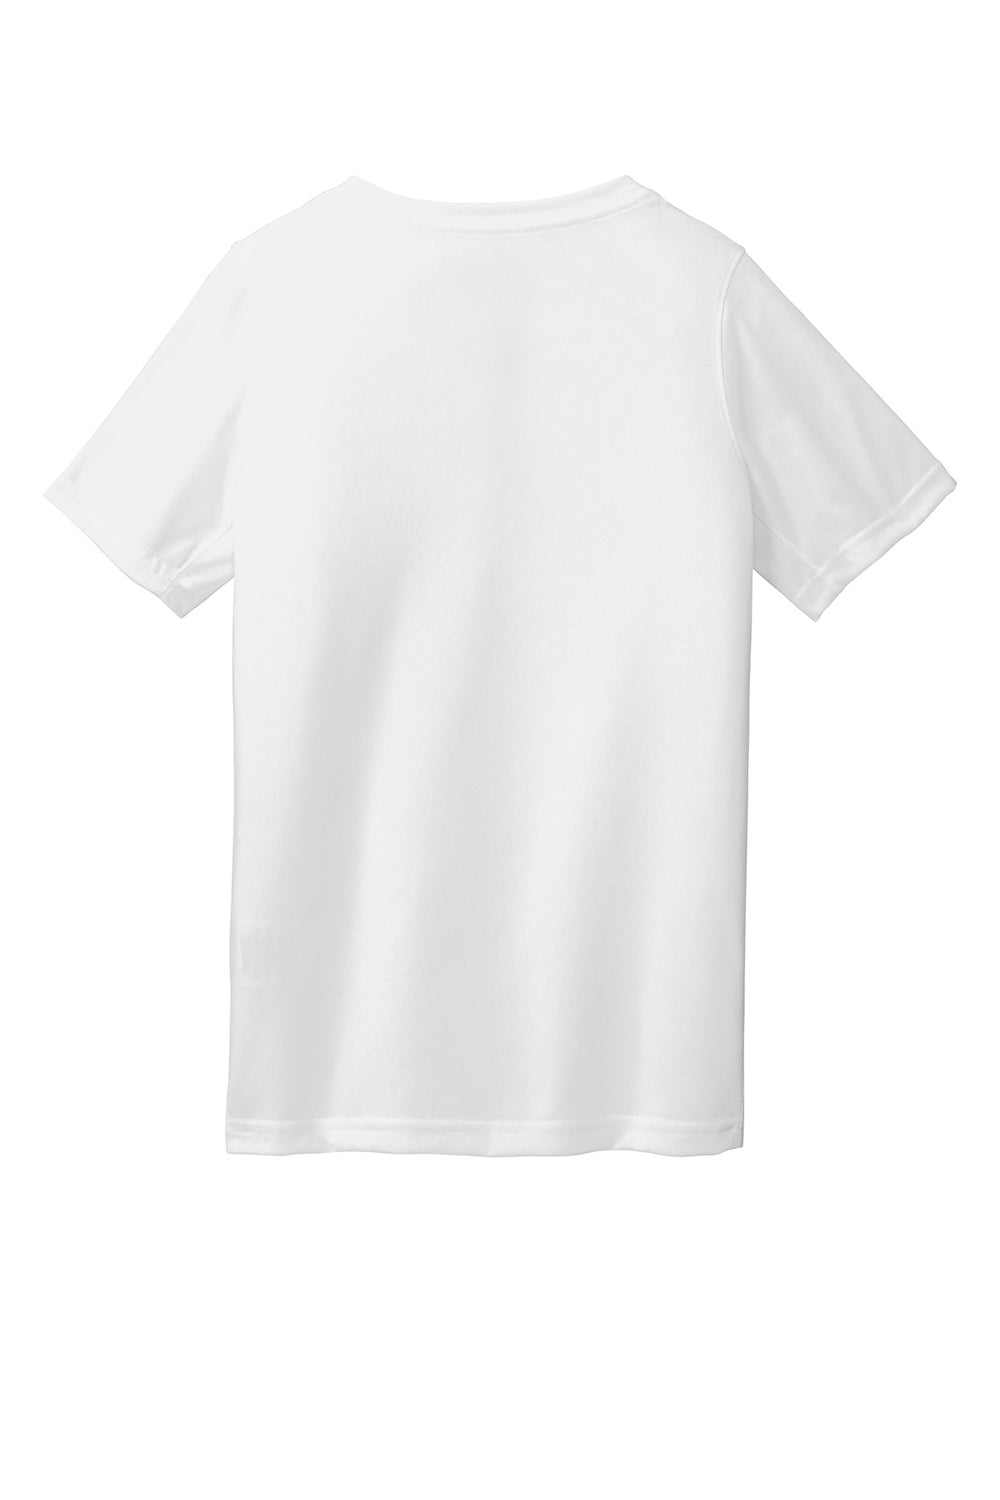 Nike 840178 Youth Legend Dri-Fit Moisture Wicking Short Sleeve Crewneck T-Shirt White Flat Back